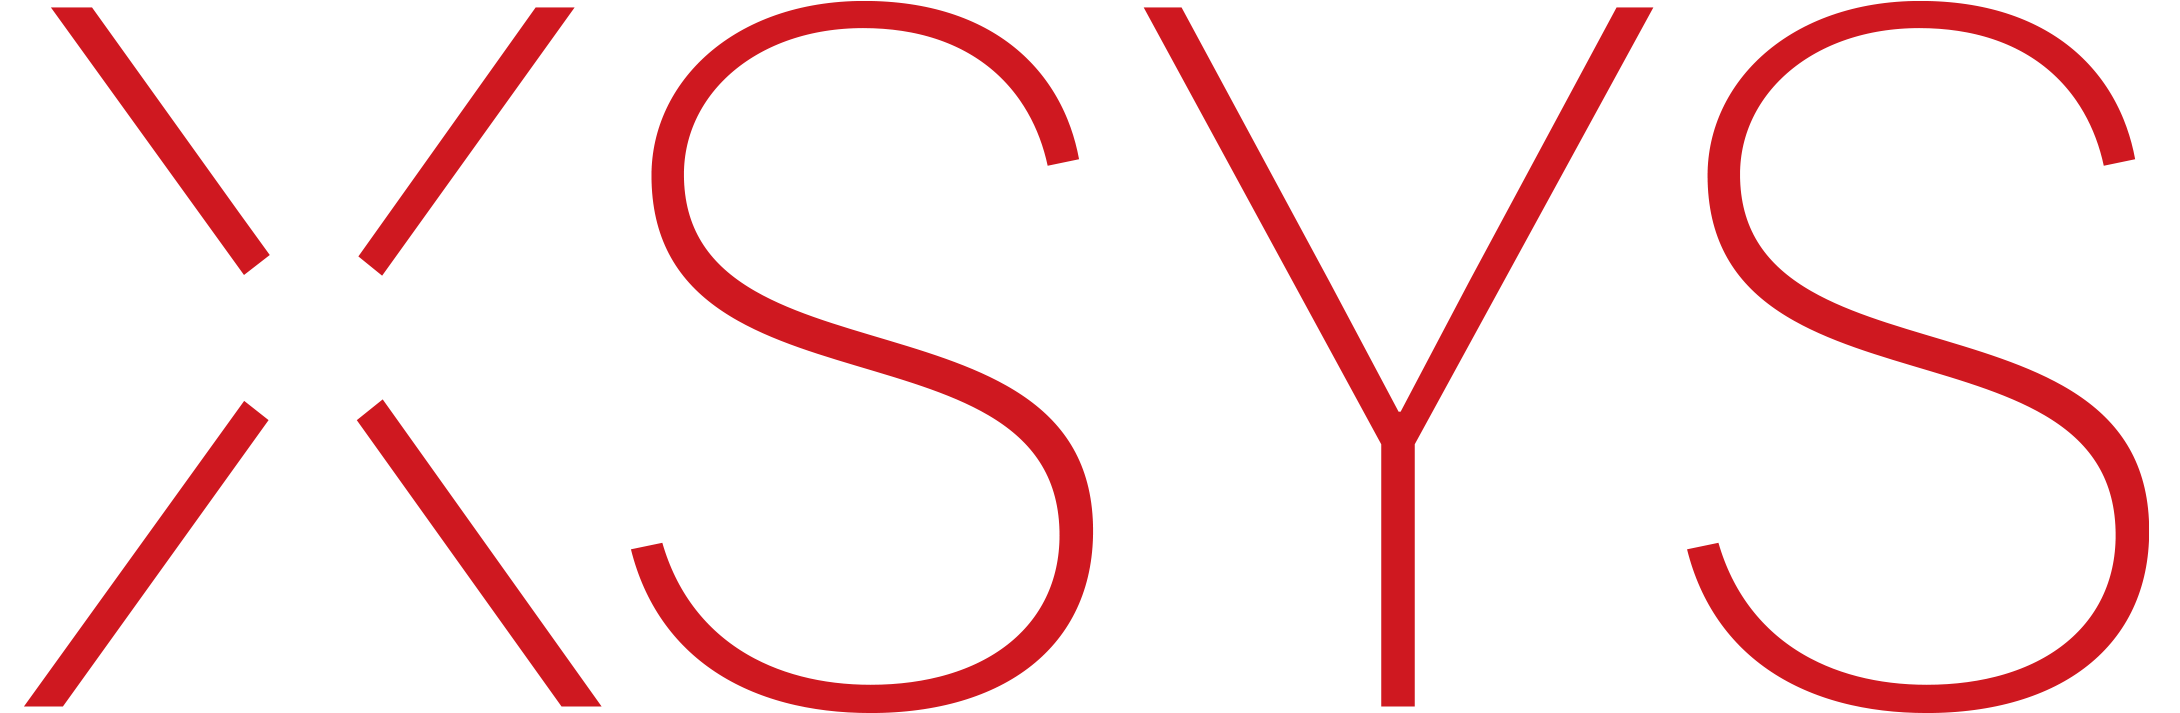 xsys_logo.png, 82kB